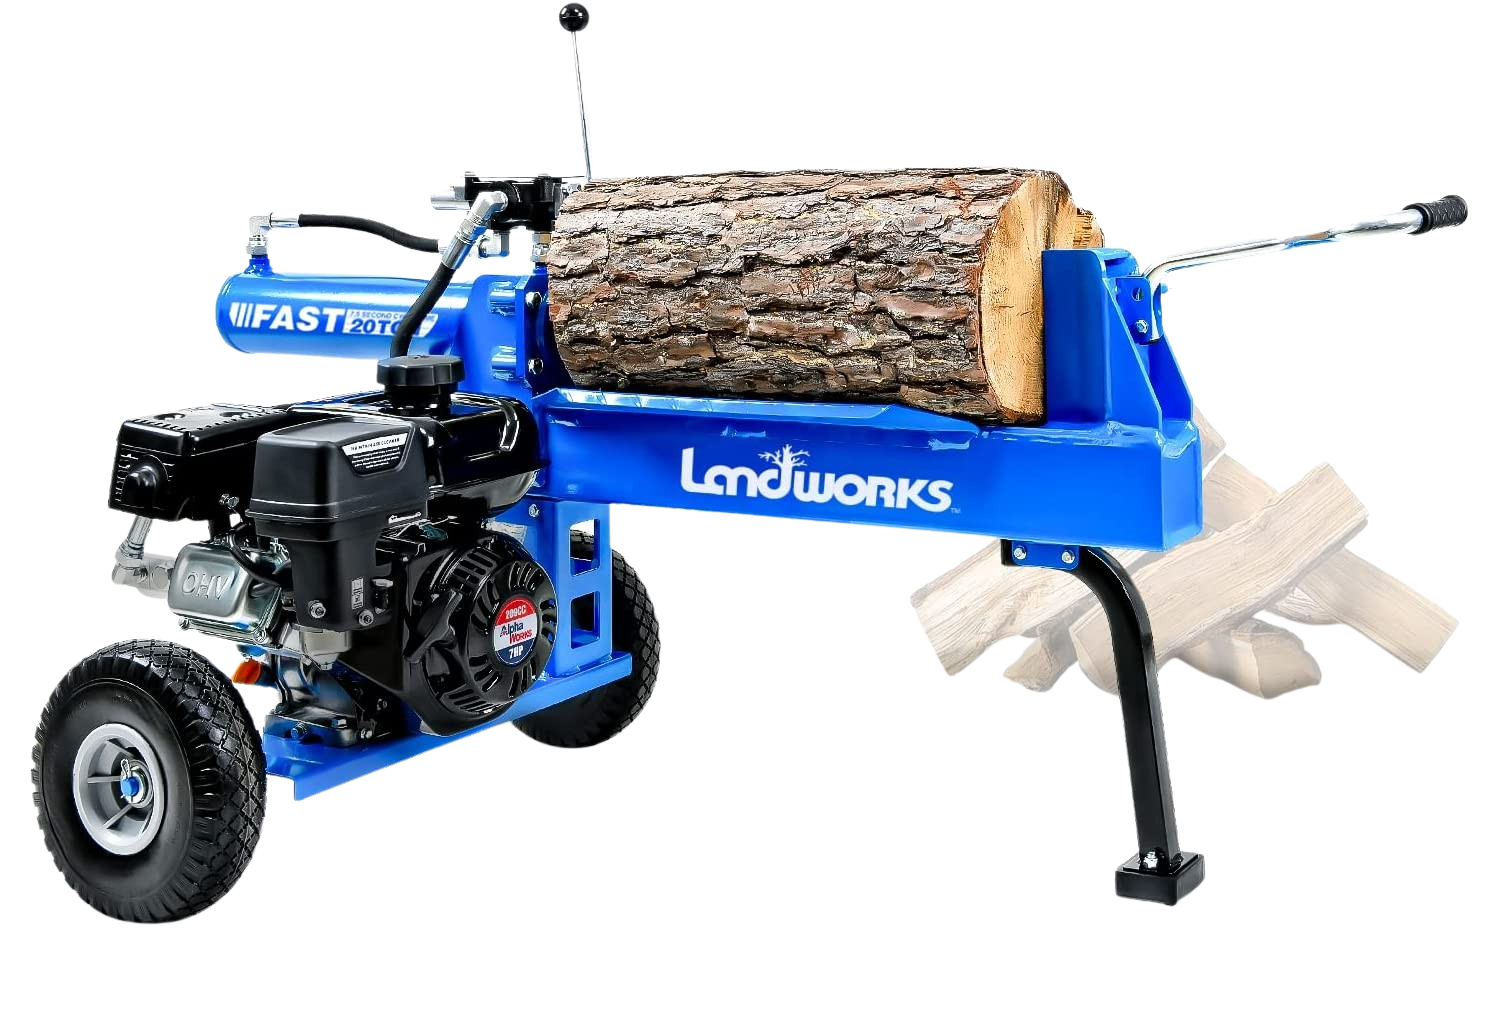 Landworks, Landworks GUO079 7HP 212 CC 10" Diameter 20 Ton Hydraulic System Gas-Powered Log Splitter New